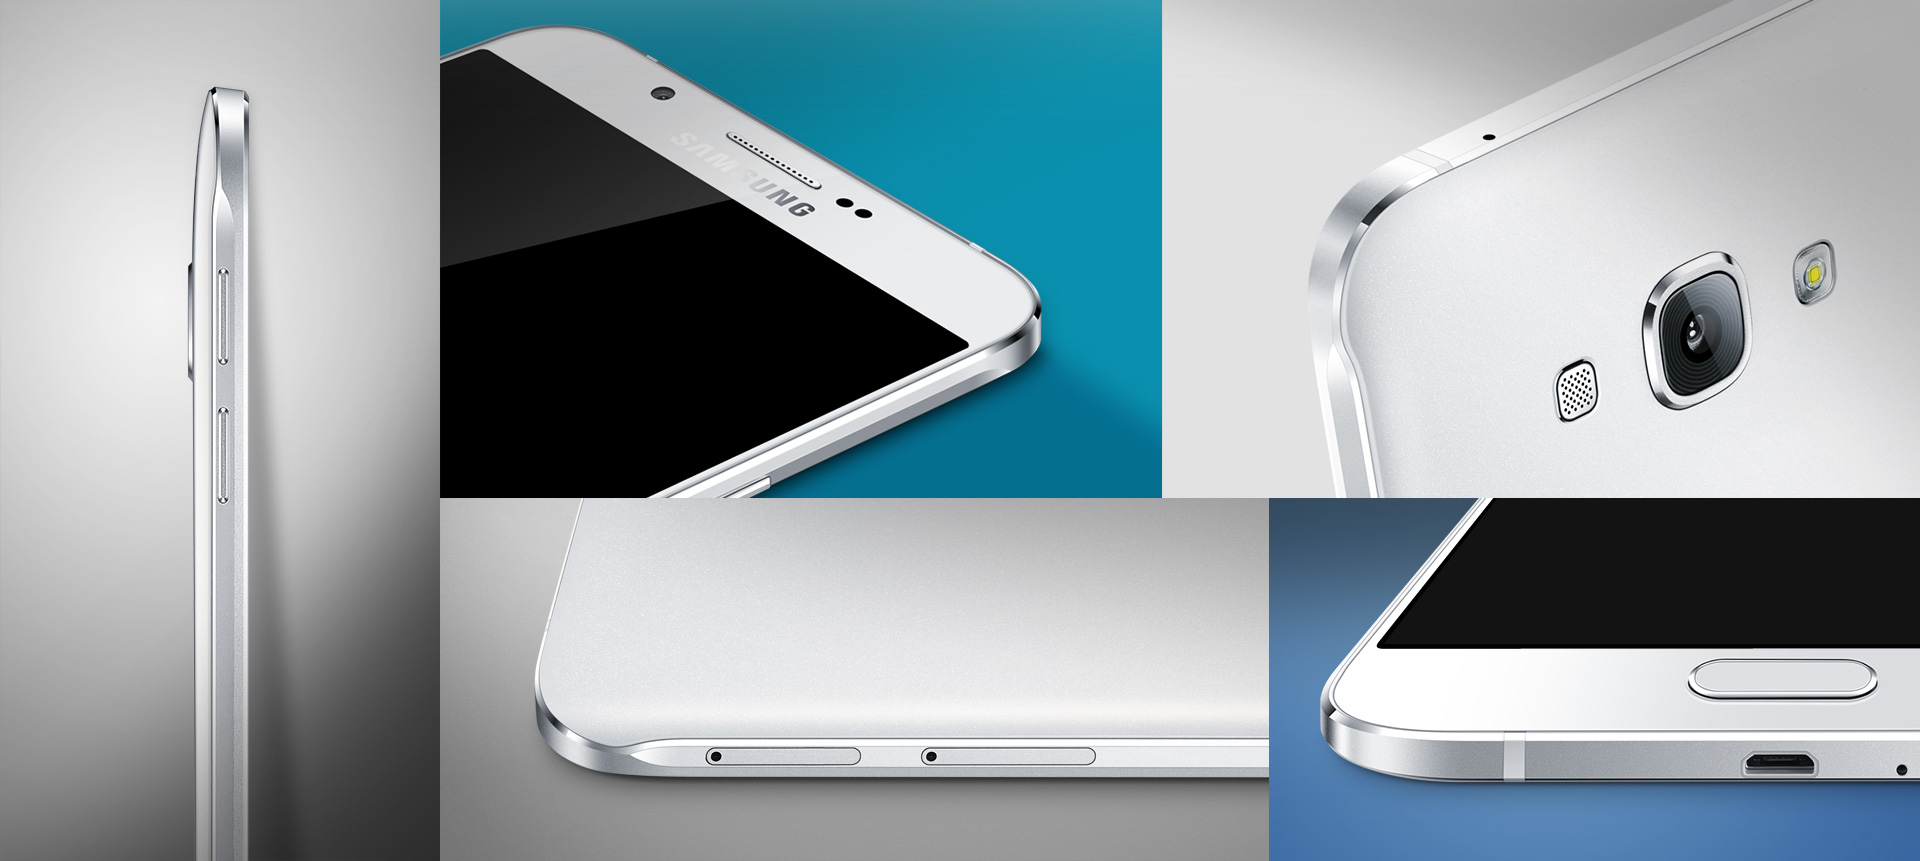 Druhá genarace Galaxy A8 v plánech Samsungu